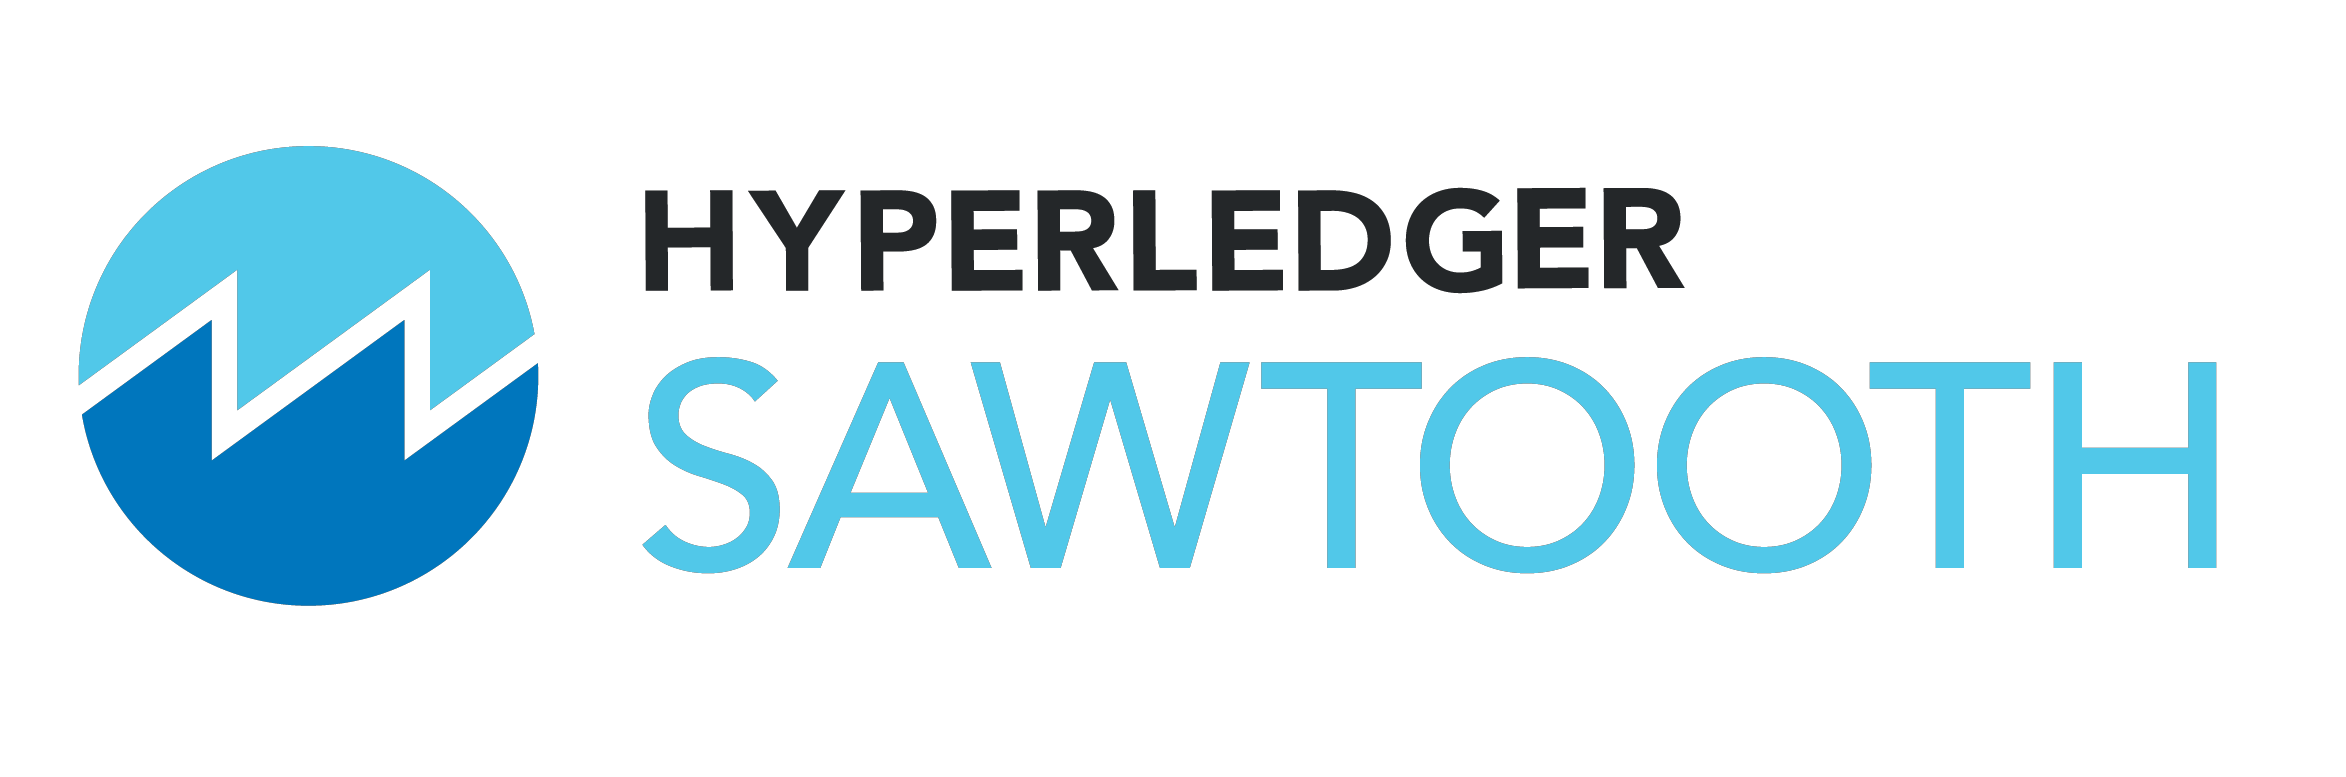 Hyperledger sawtooth